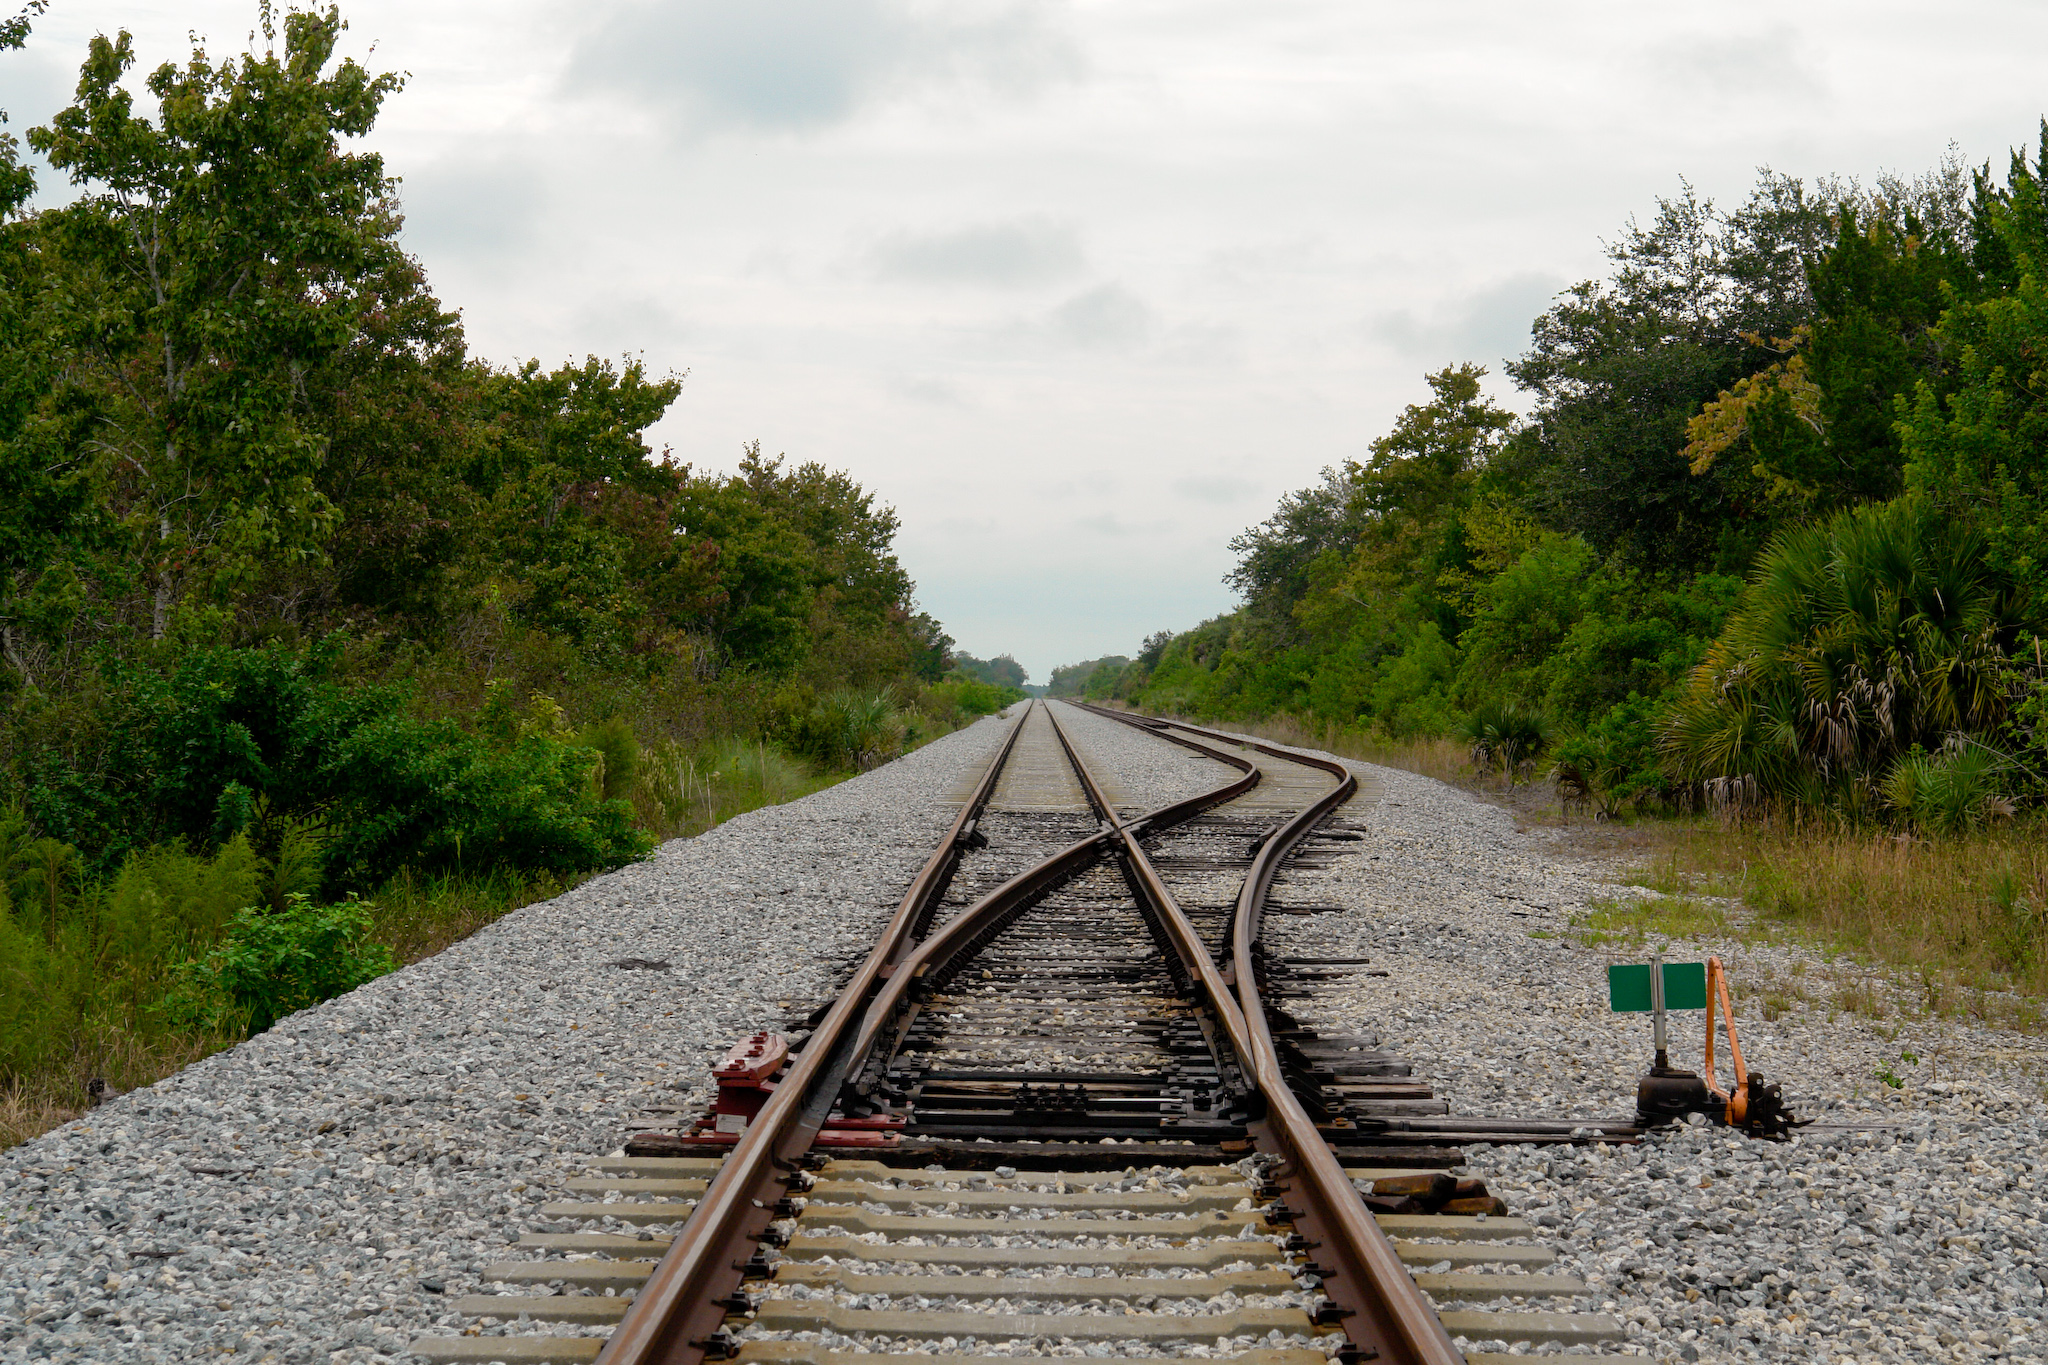 File:Railroad Tracks - Merritt Island, Florida.jpg - Wikimedia Commons